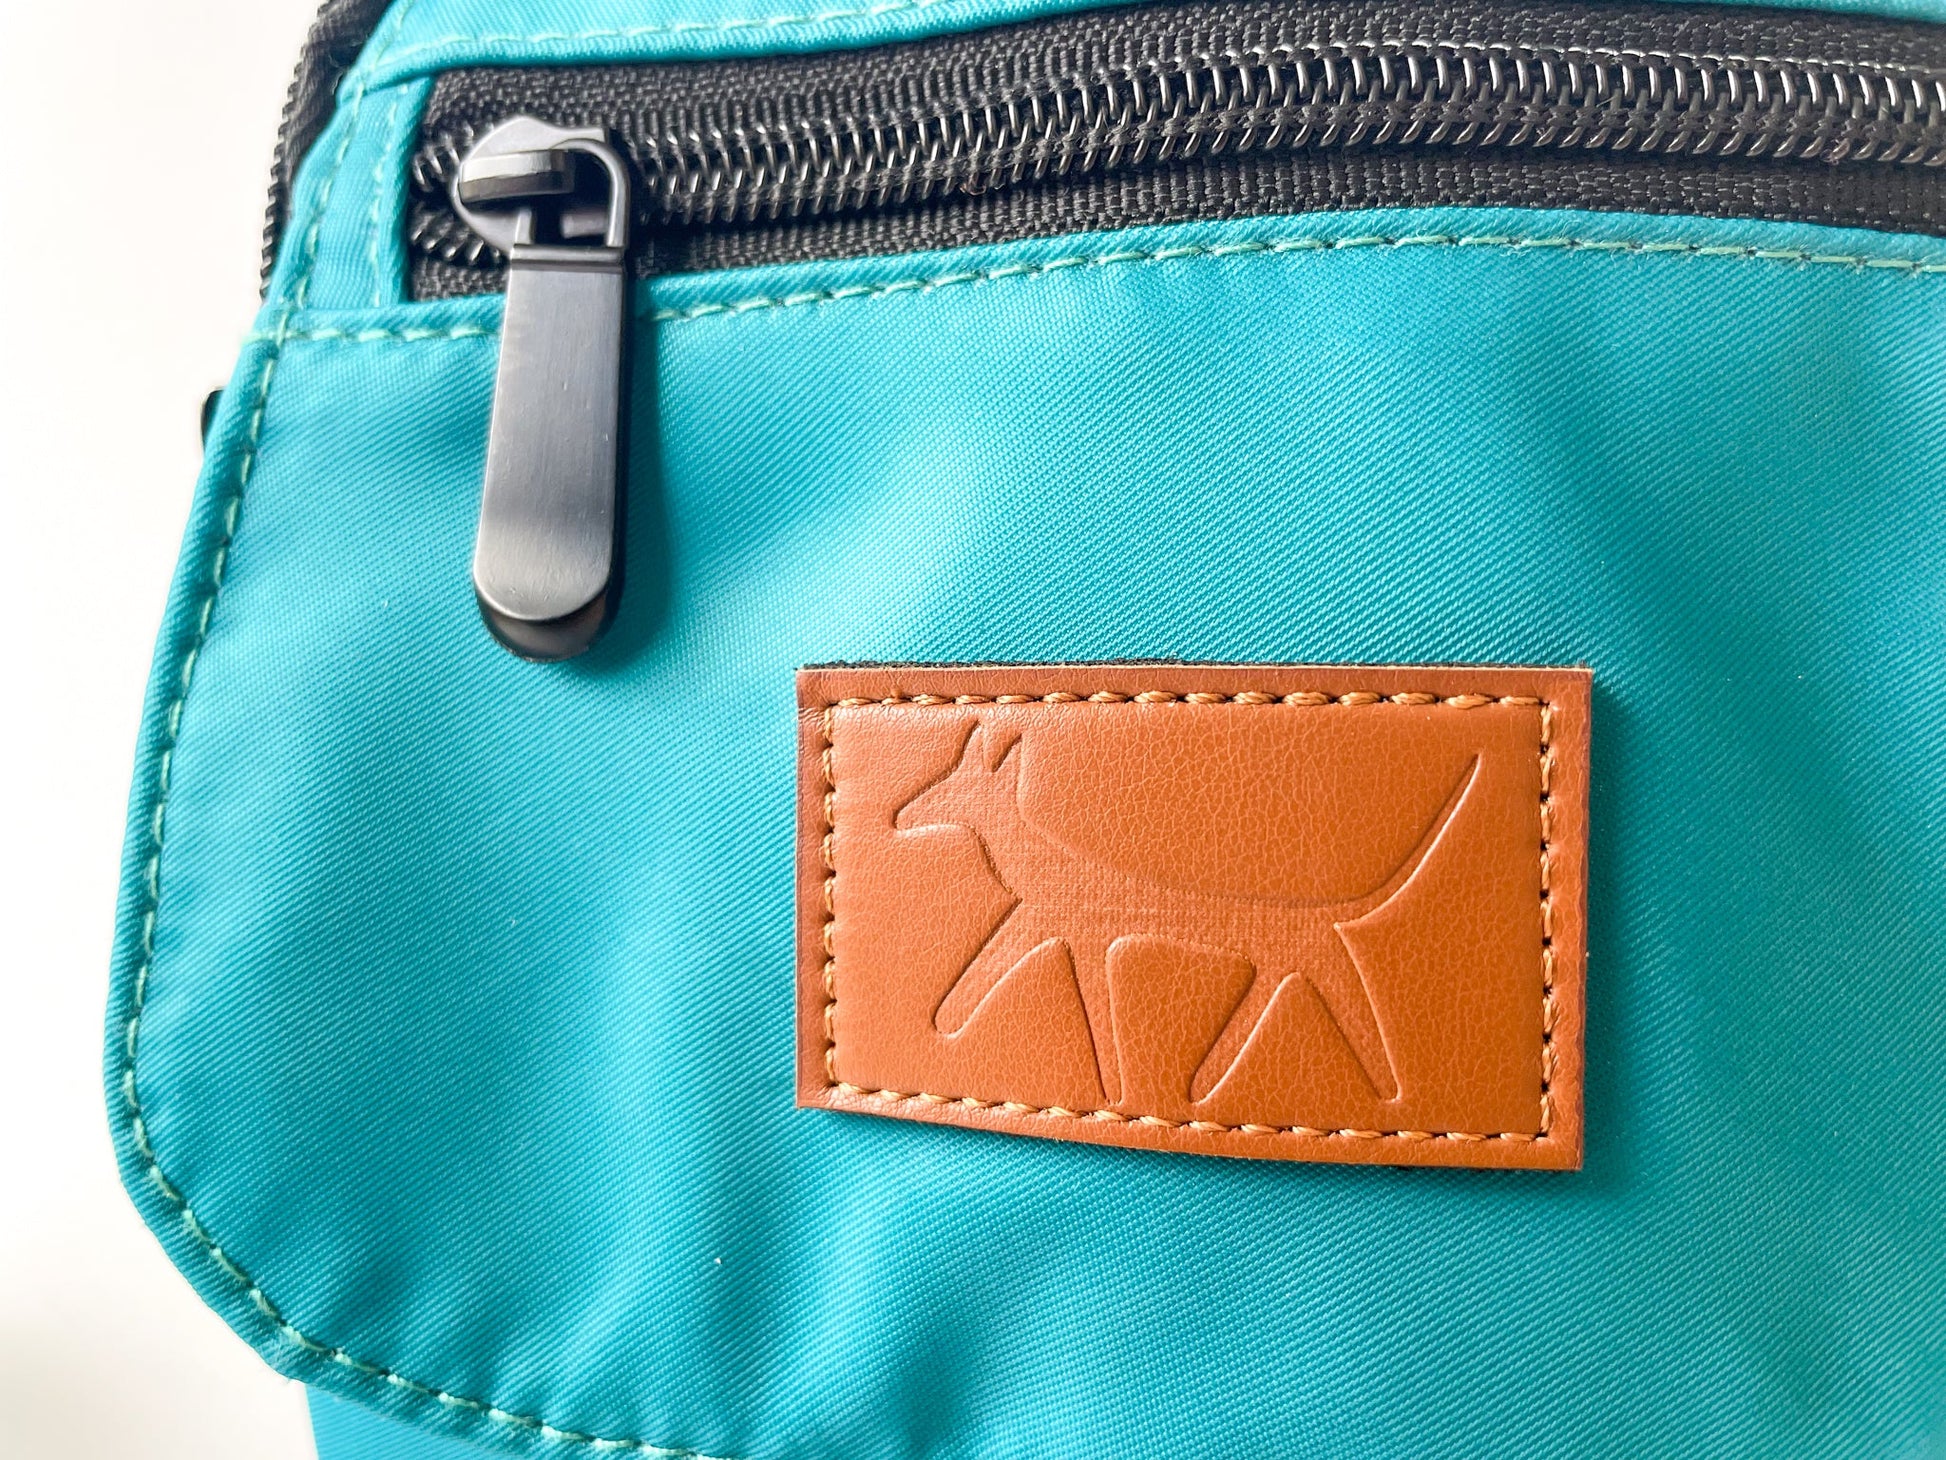 Detail of the Droggo logo on the walking bag in lake colour.